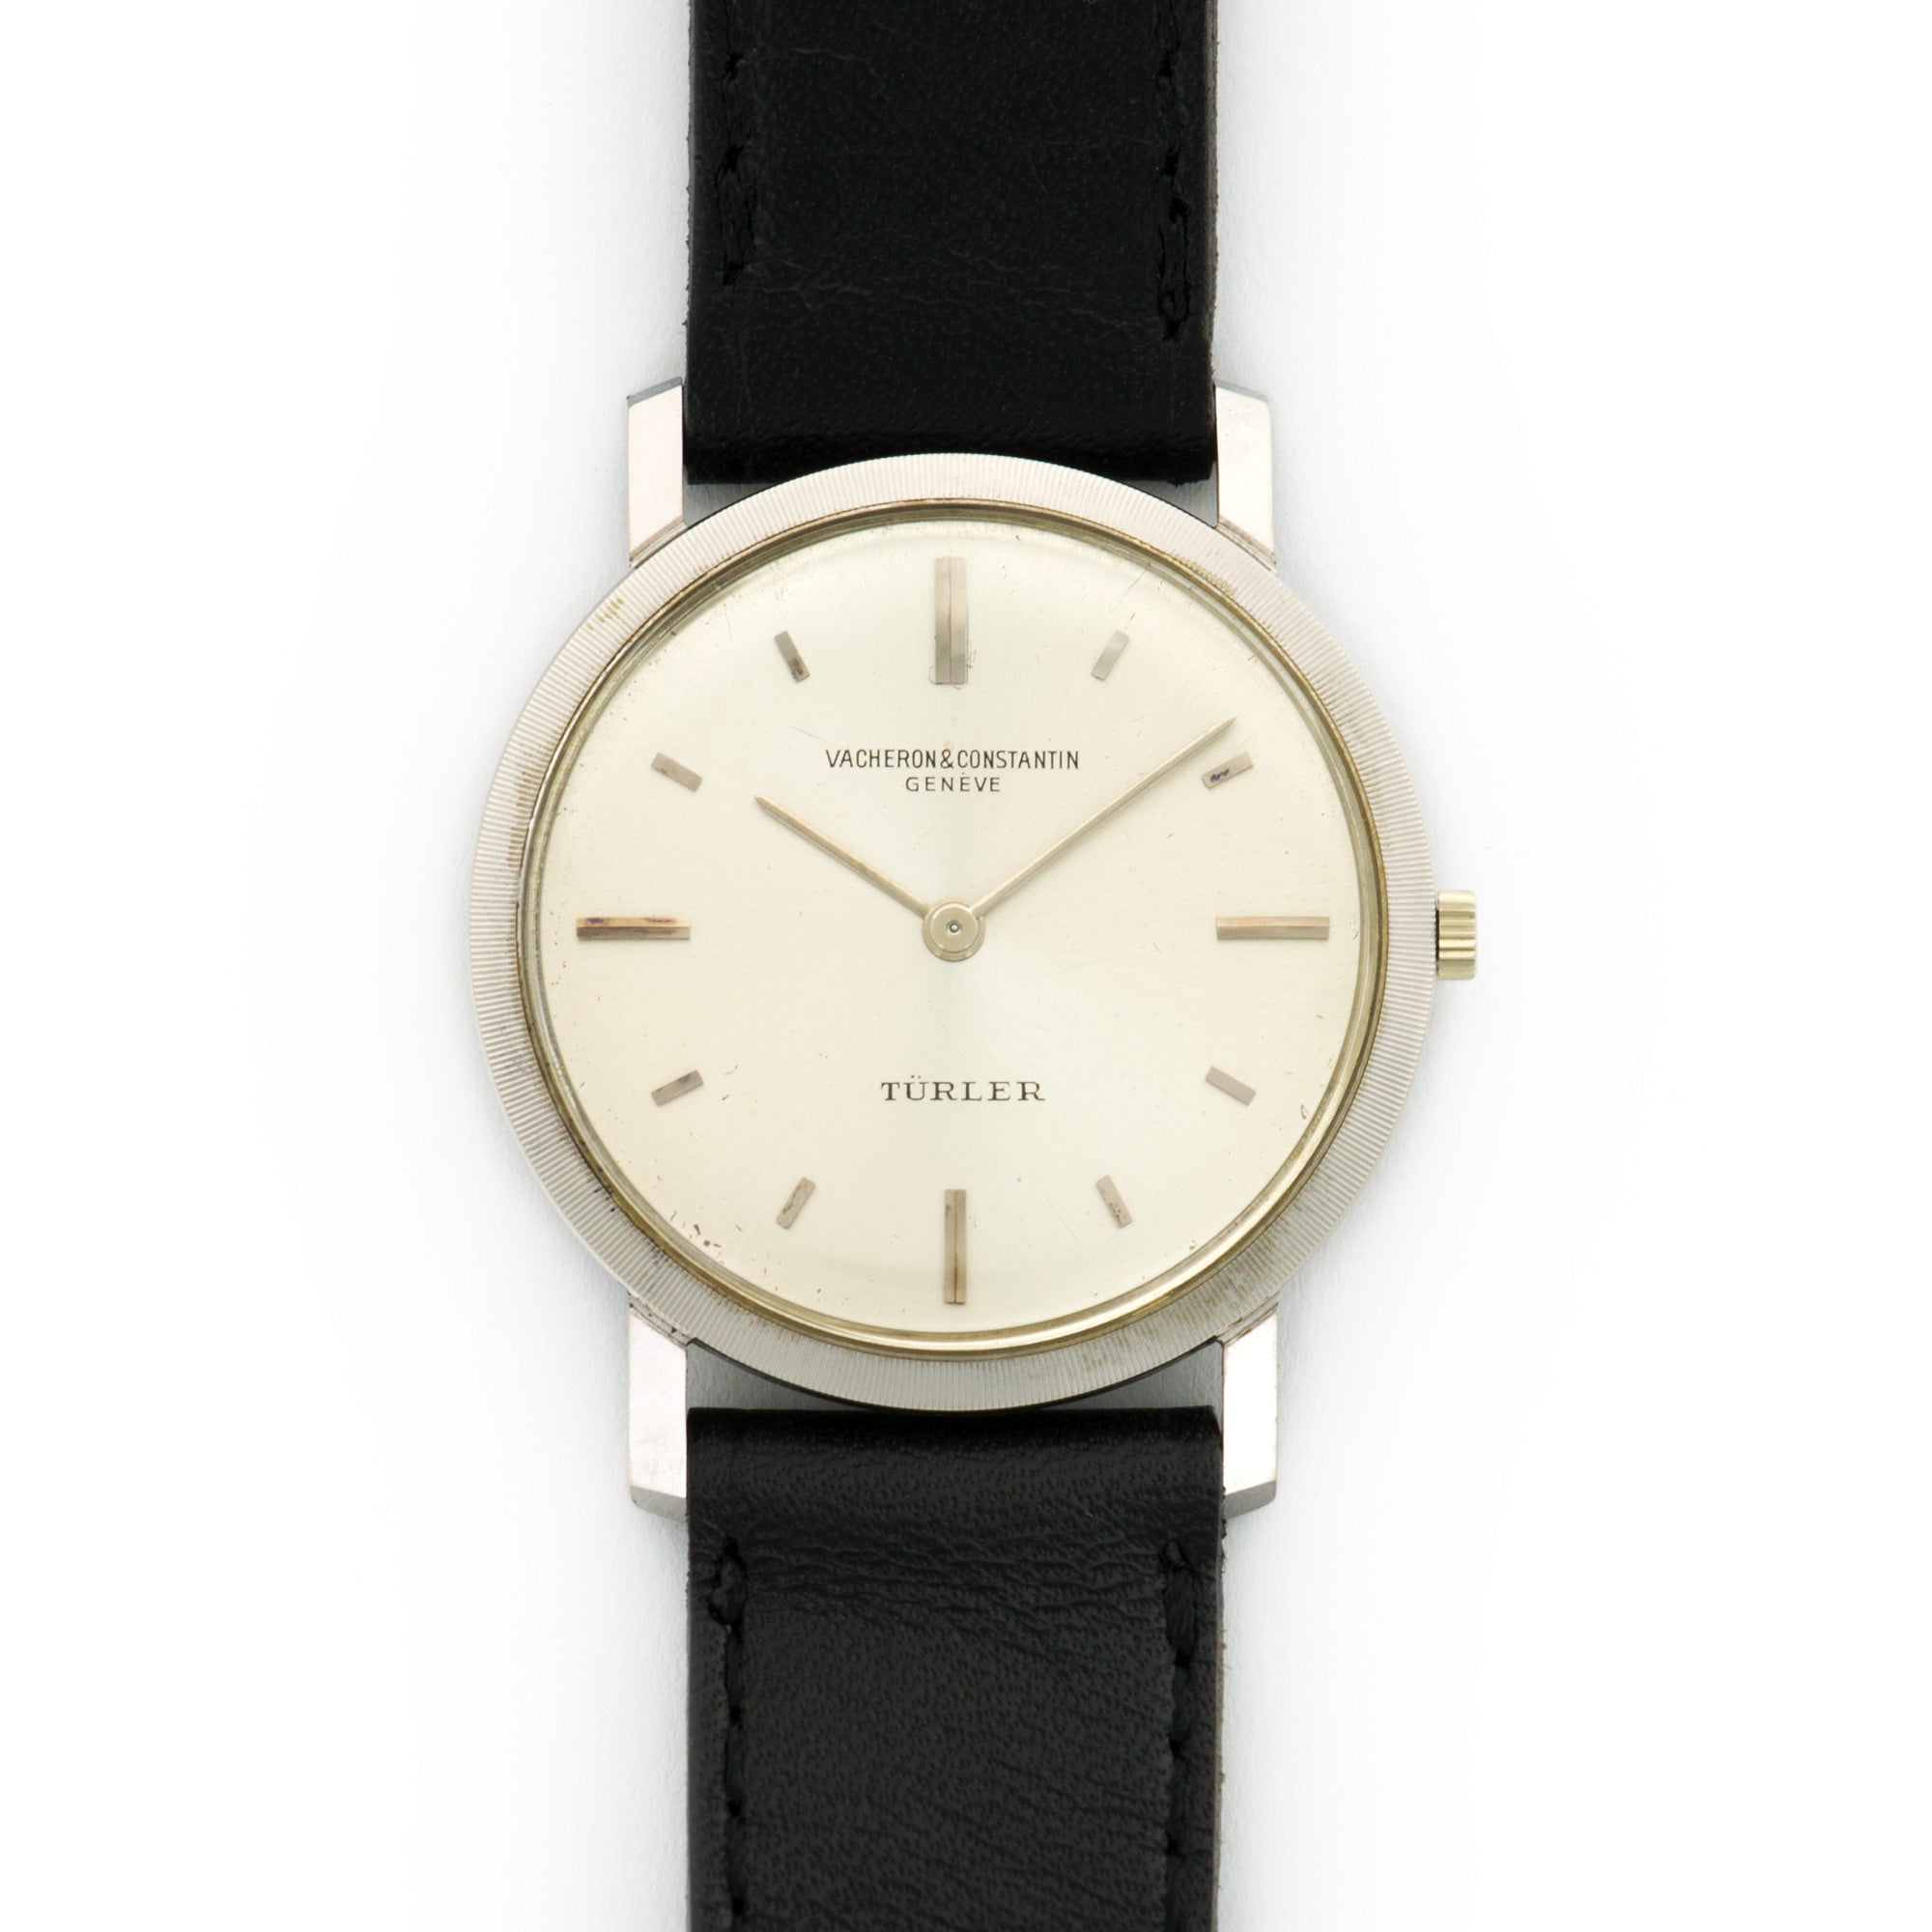 Vacheron Constantin - Vacheron Constantin White Gold Strap Watch Retailed by Turler - The Keystone Watches